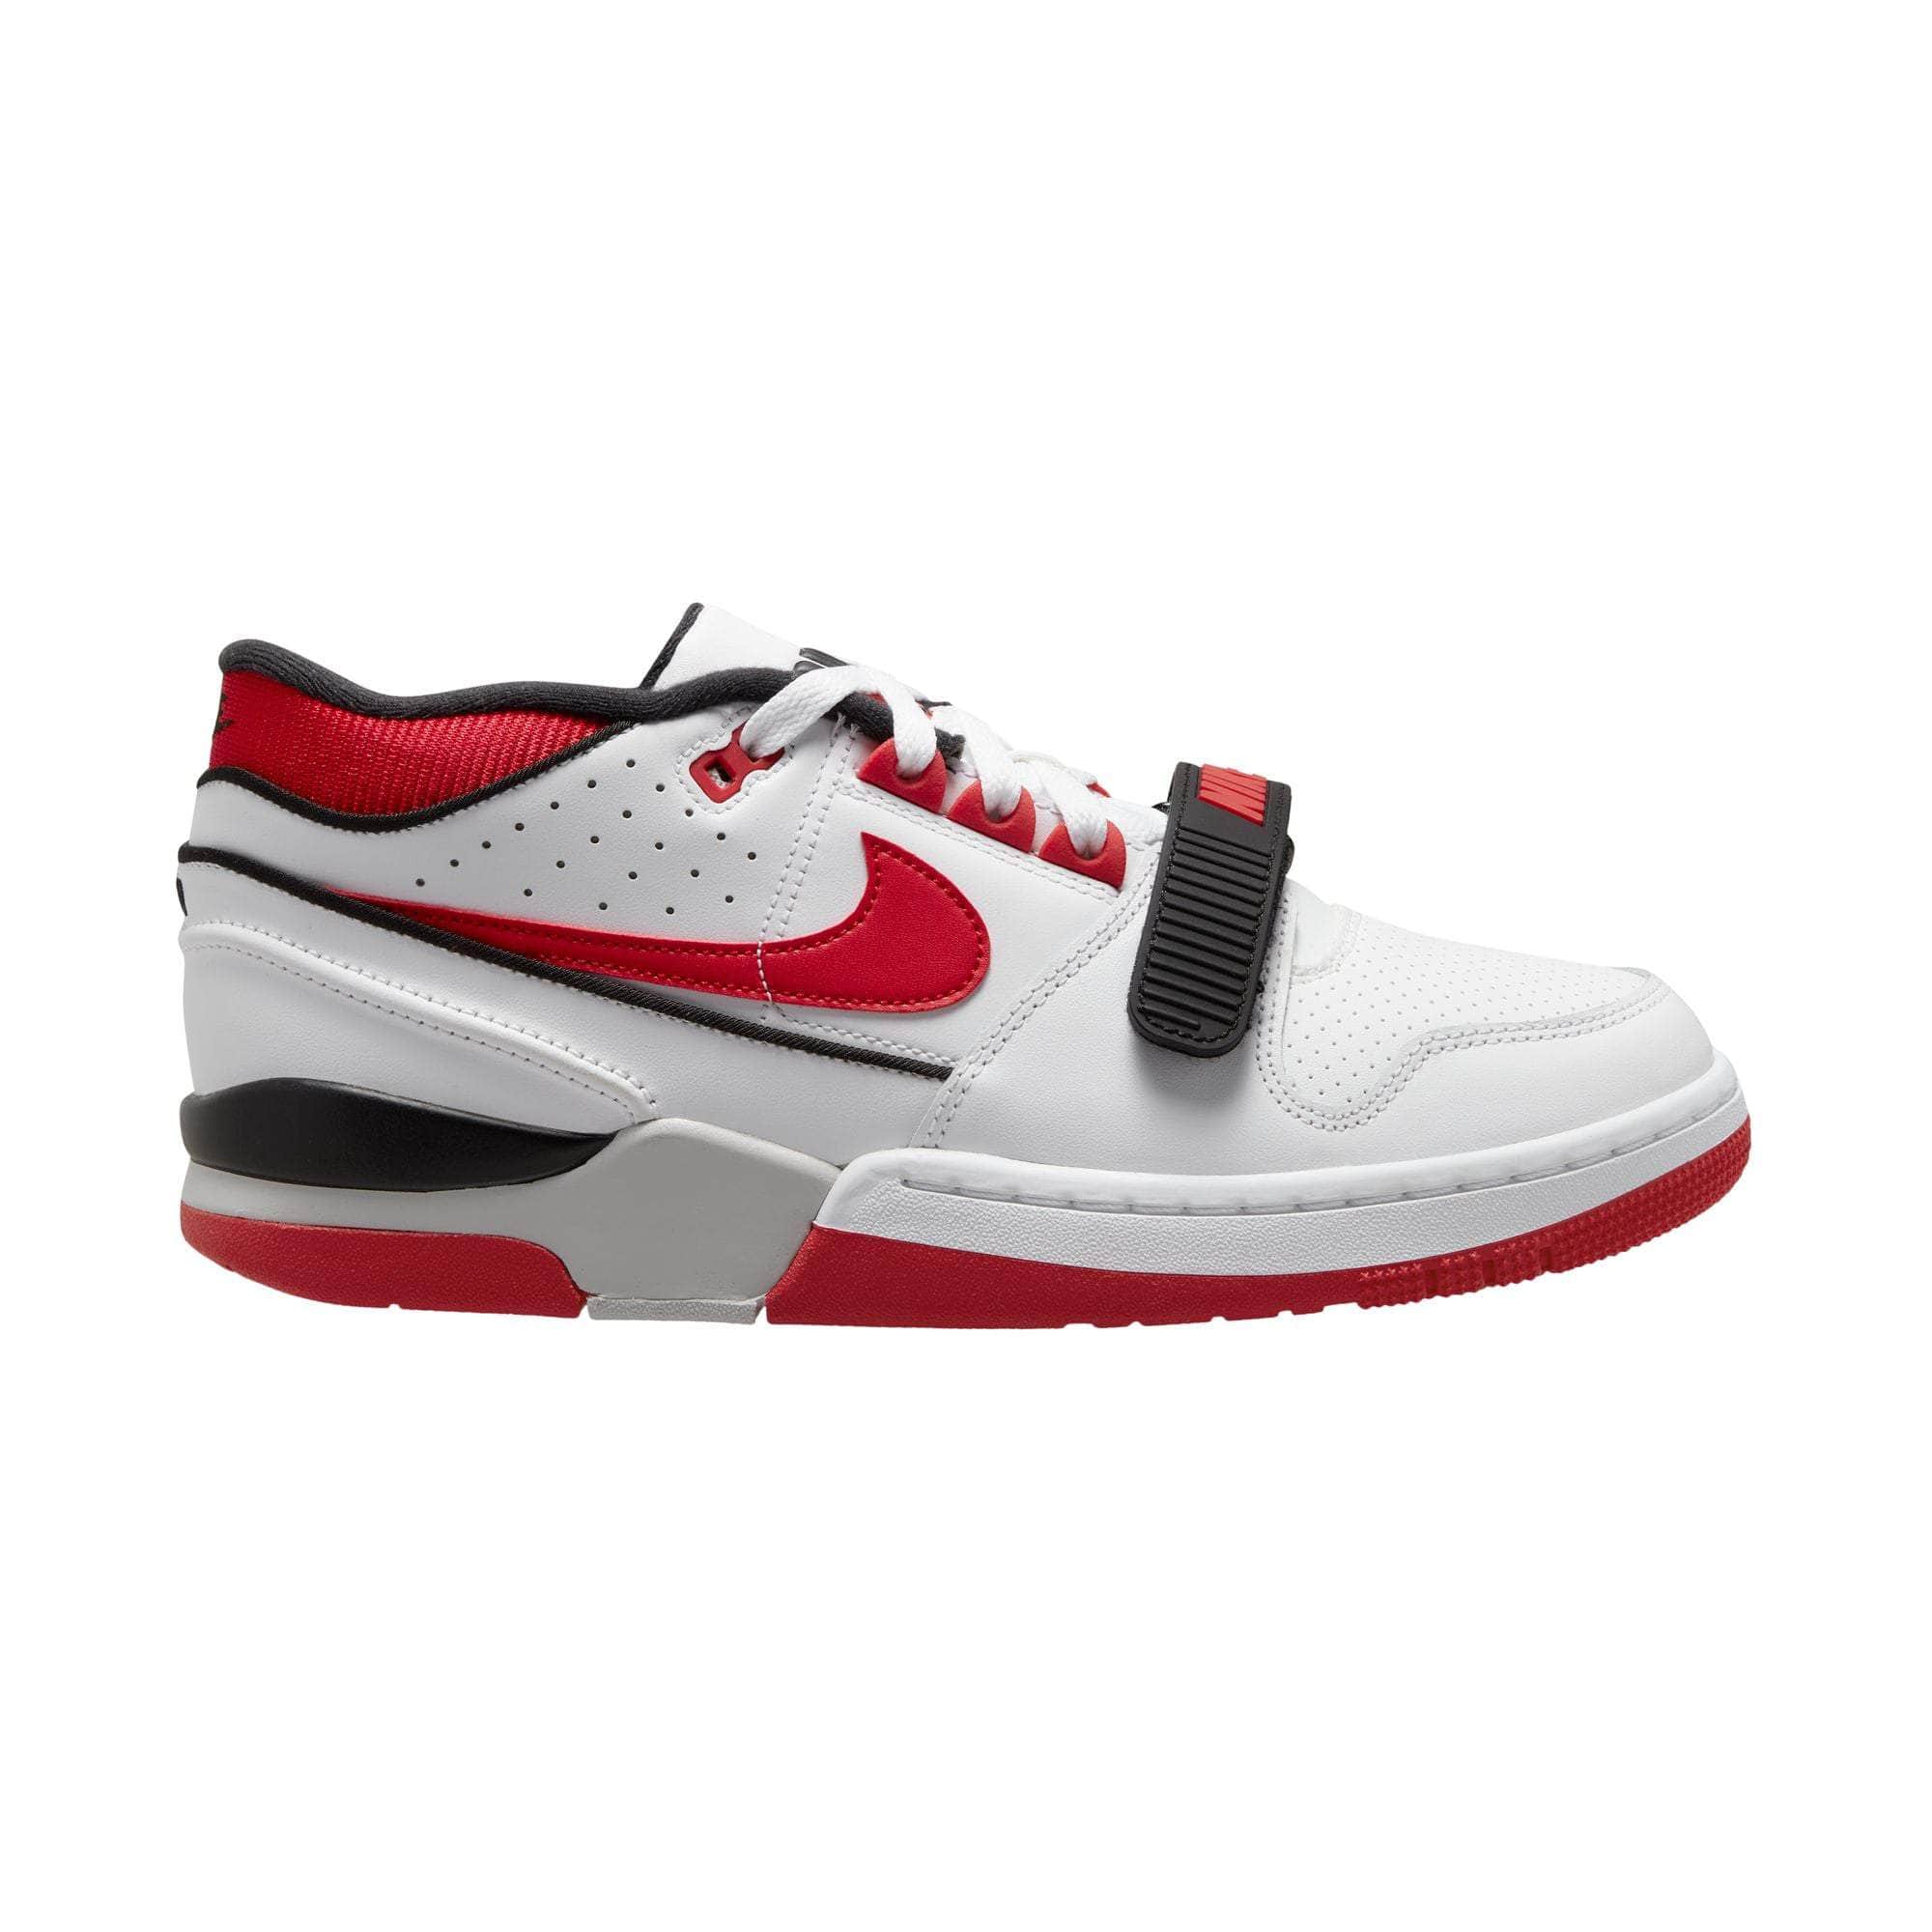 NIKE FOOTWEAR Nike Air Alpha Force 88 "University Red" - Men's